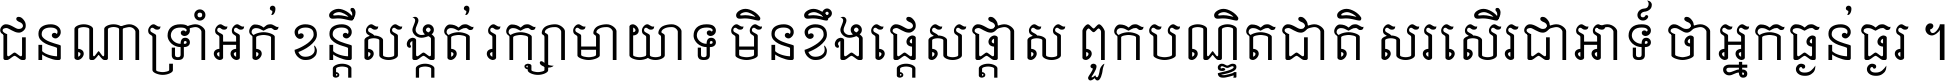 Khmer Mondulkiri K